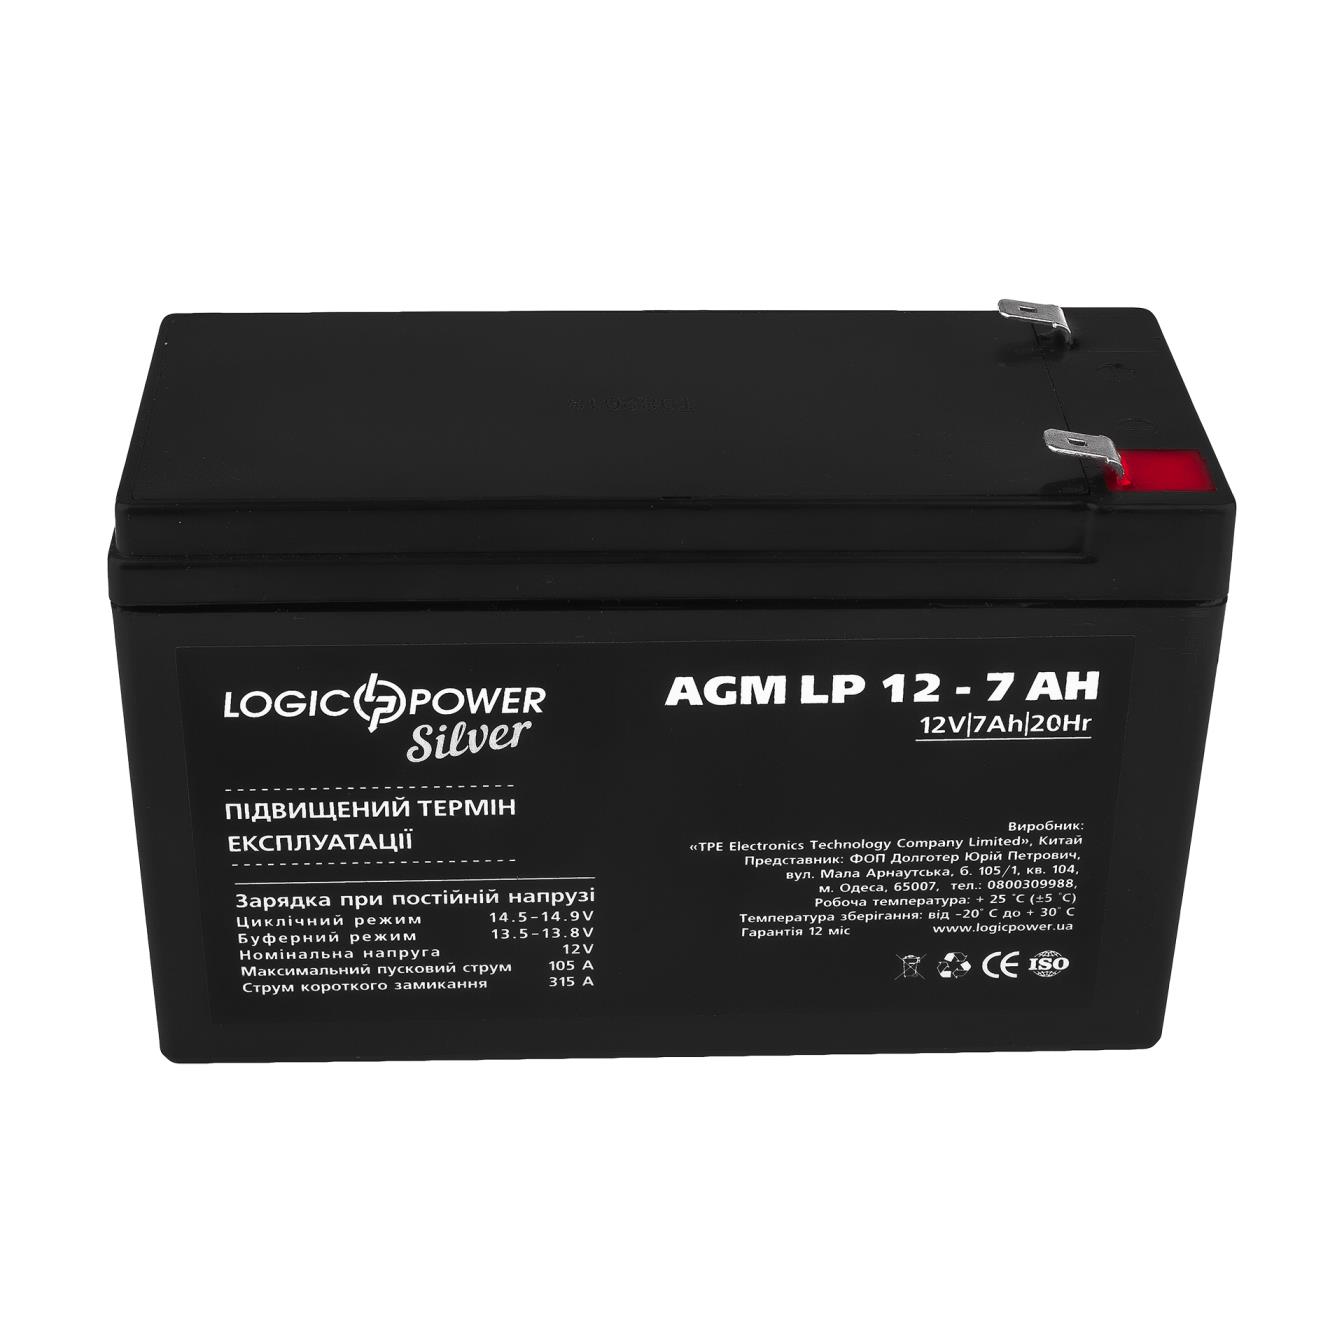 Аккумулятор свинцово-кислотный LogicPower AGM LP 12V - 7 Ah Silver (1217) цена 809.00 грн - фотография 2